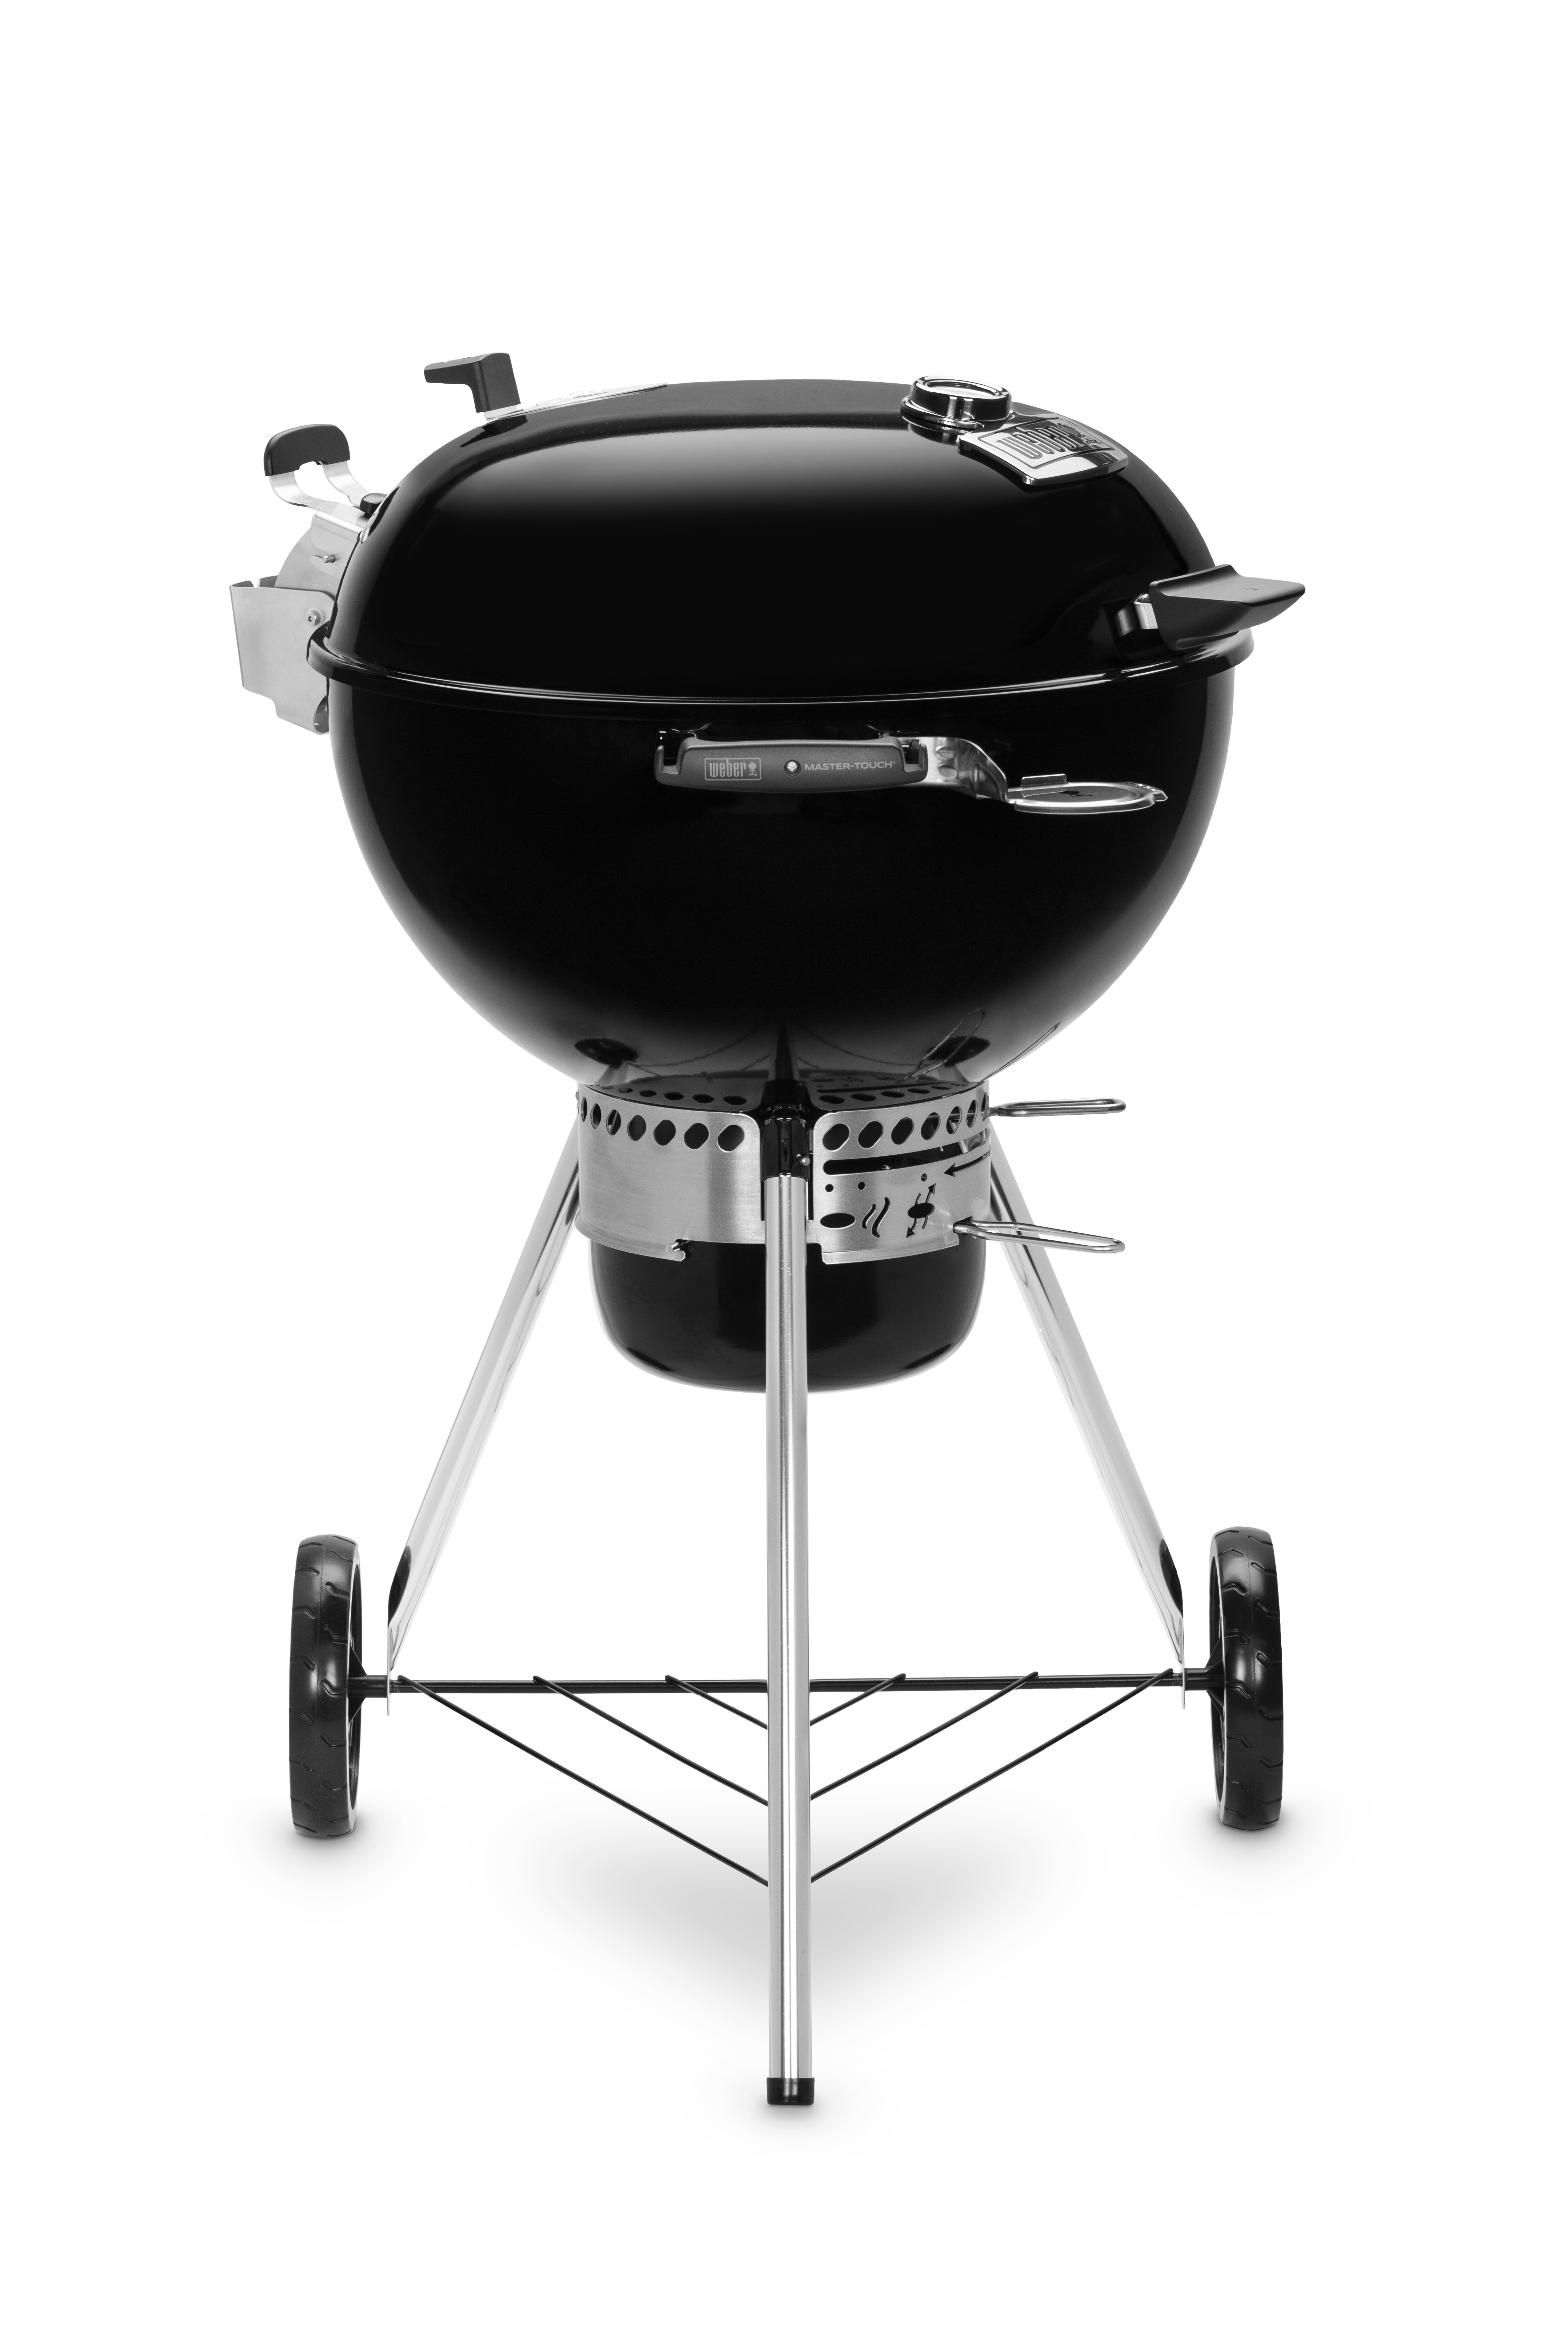 Barbecue Master-Touch GBS Premium noir 57 cm E-5770 - Weber